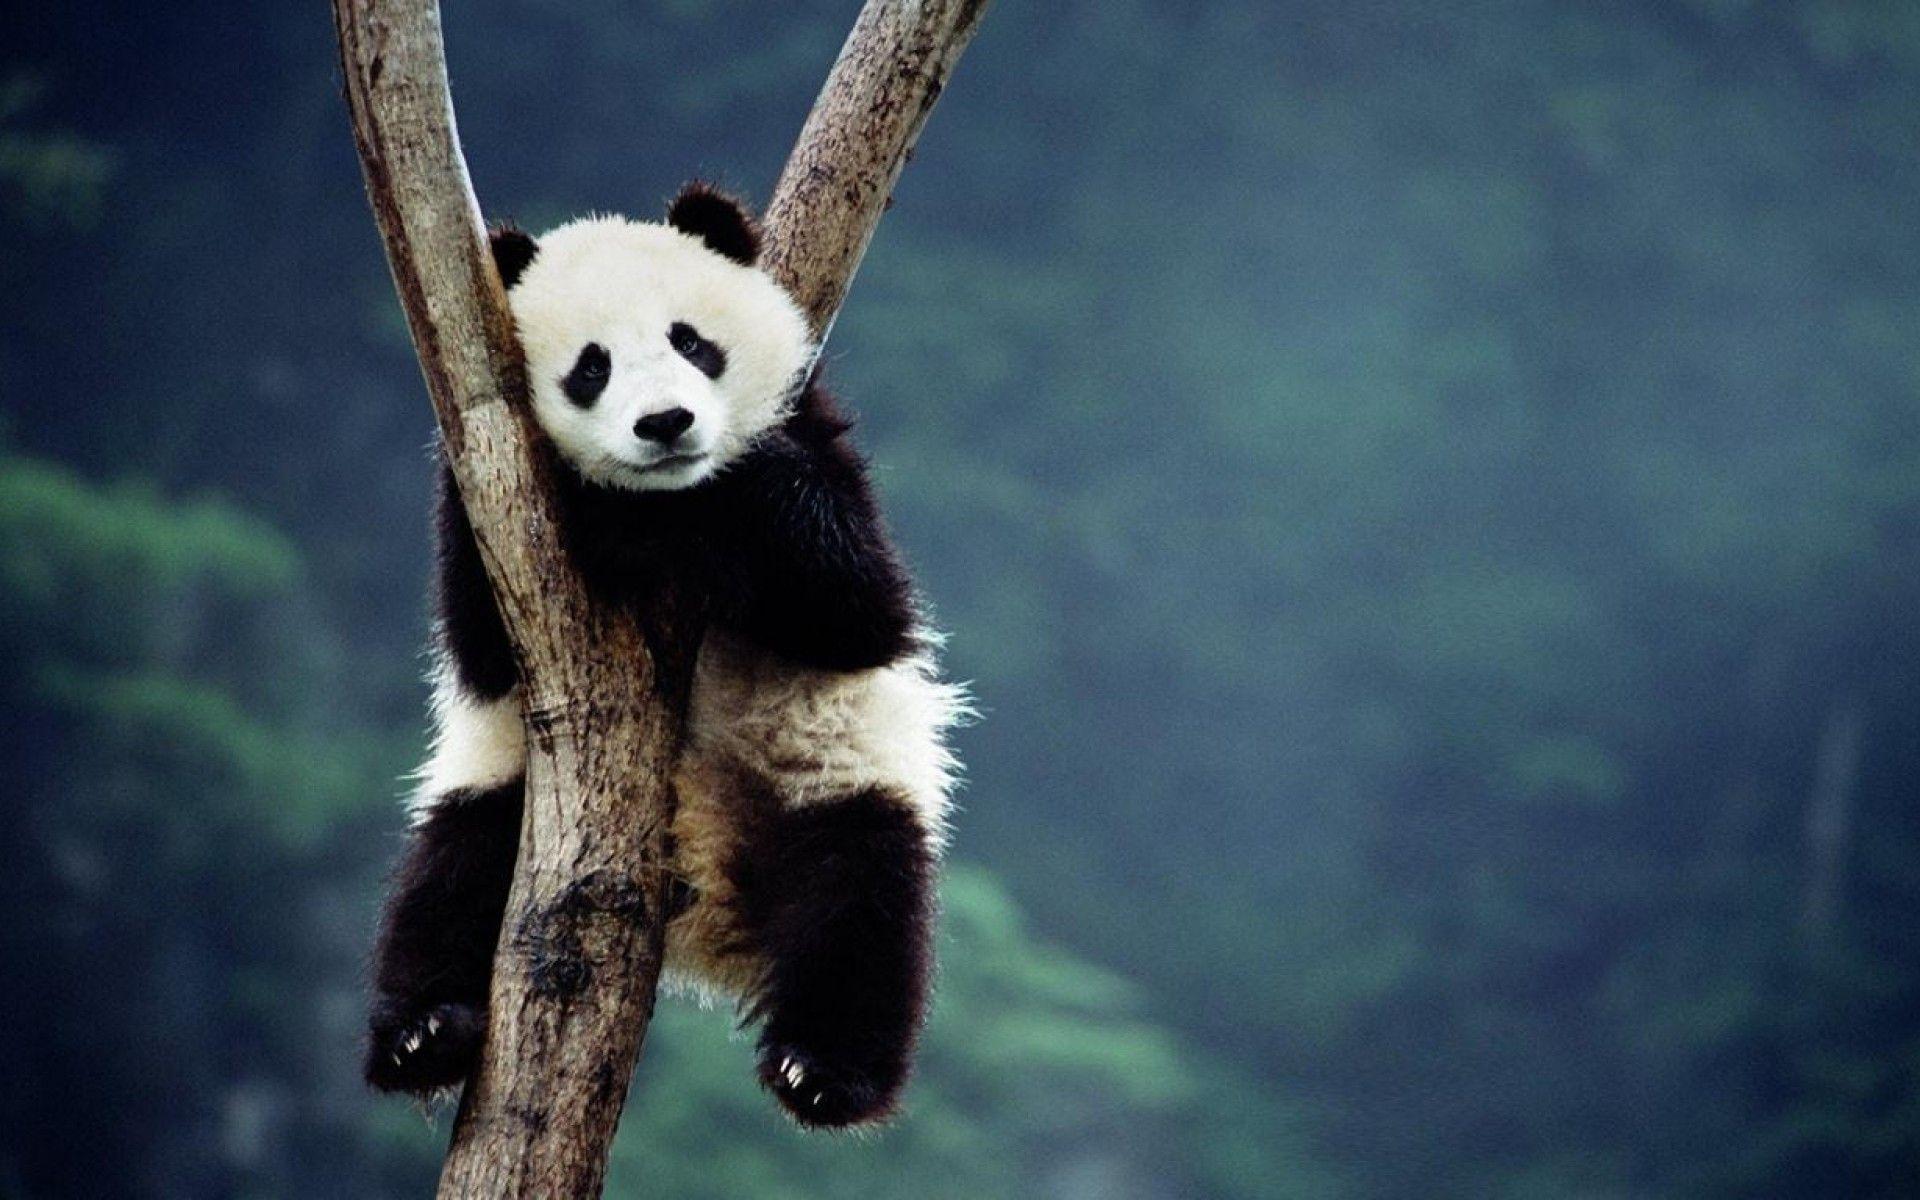 panda background 13. Background Check All